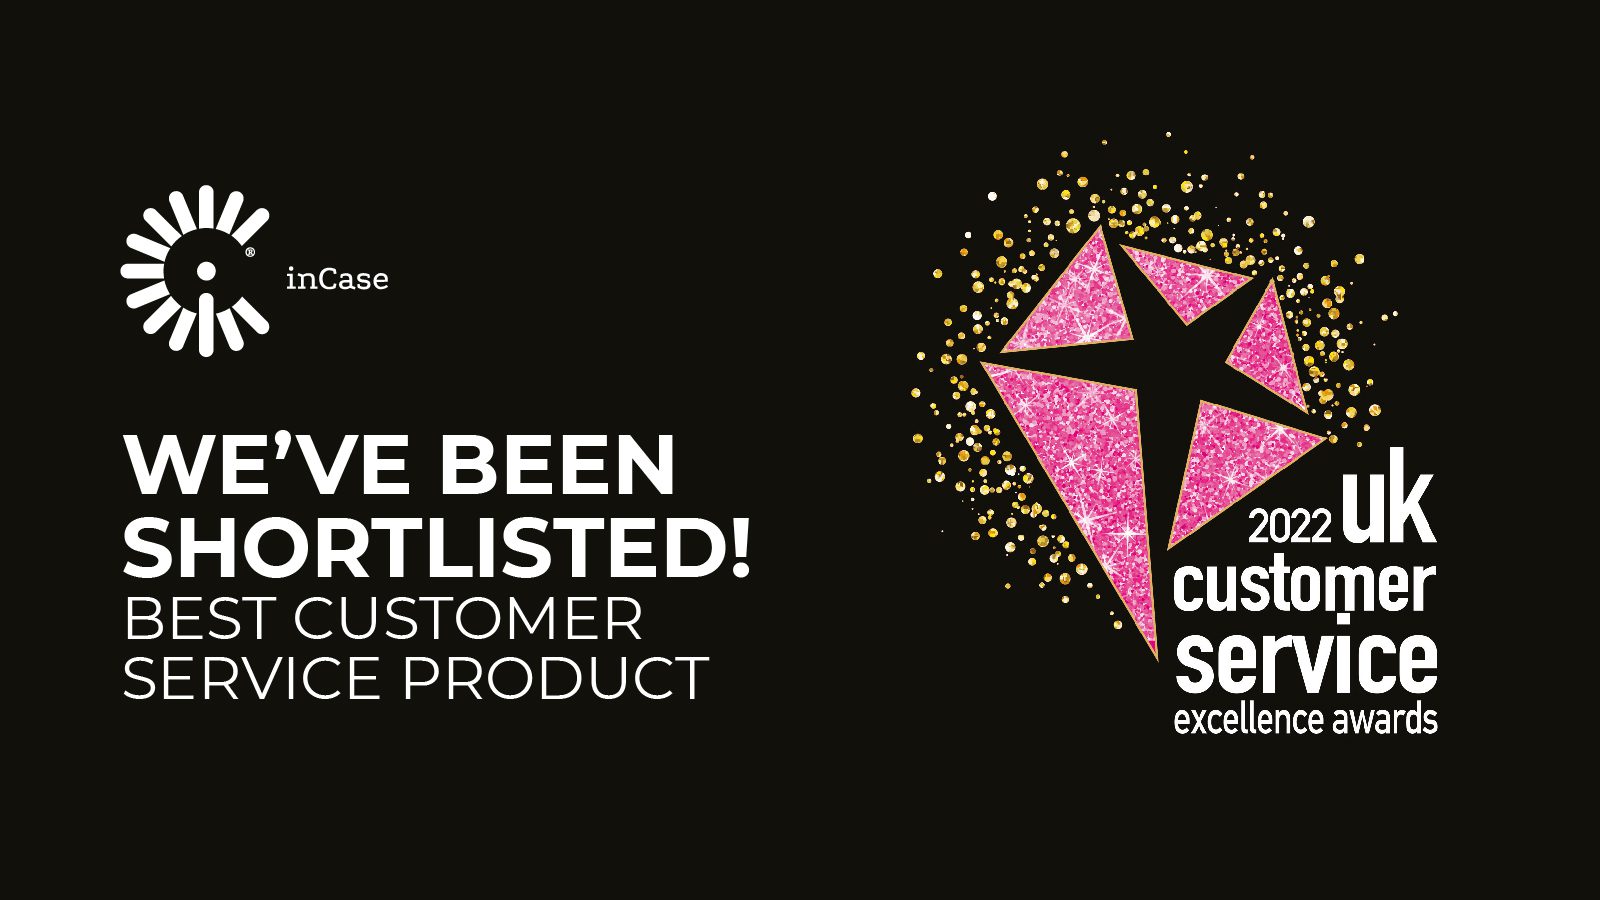 We've been shortlisted! Best Customer Service Product - UK Customer Service Excellence Awards